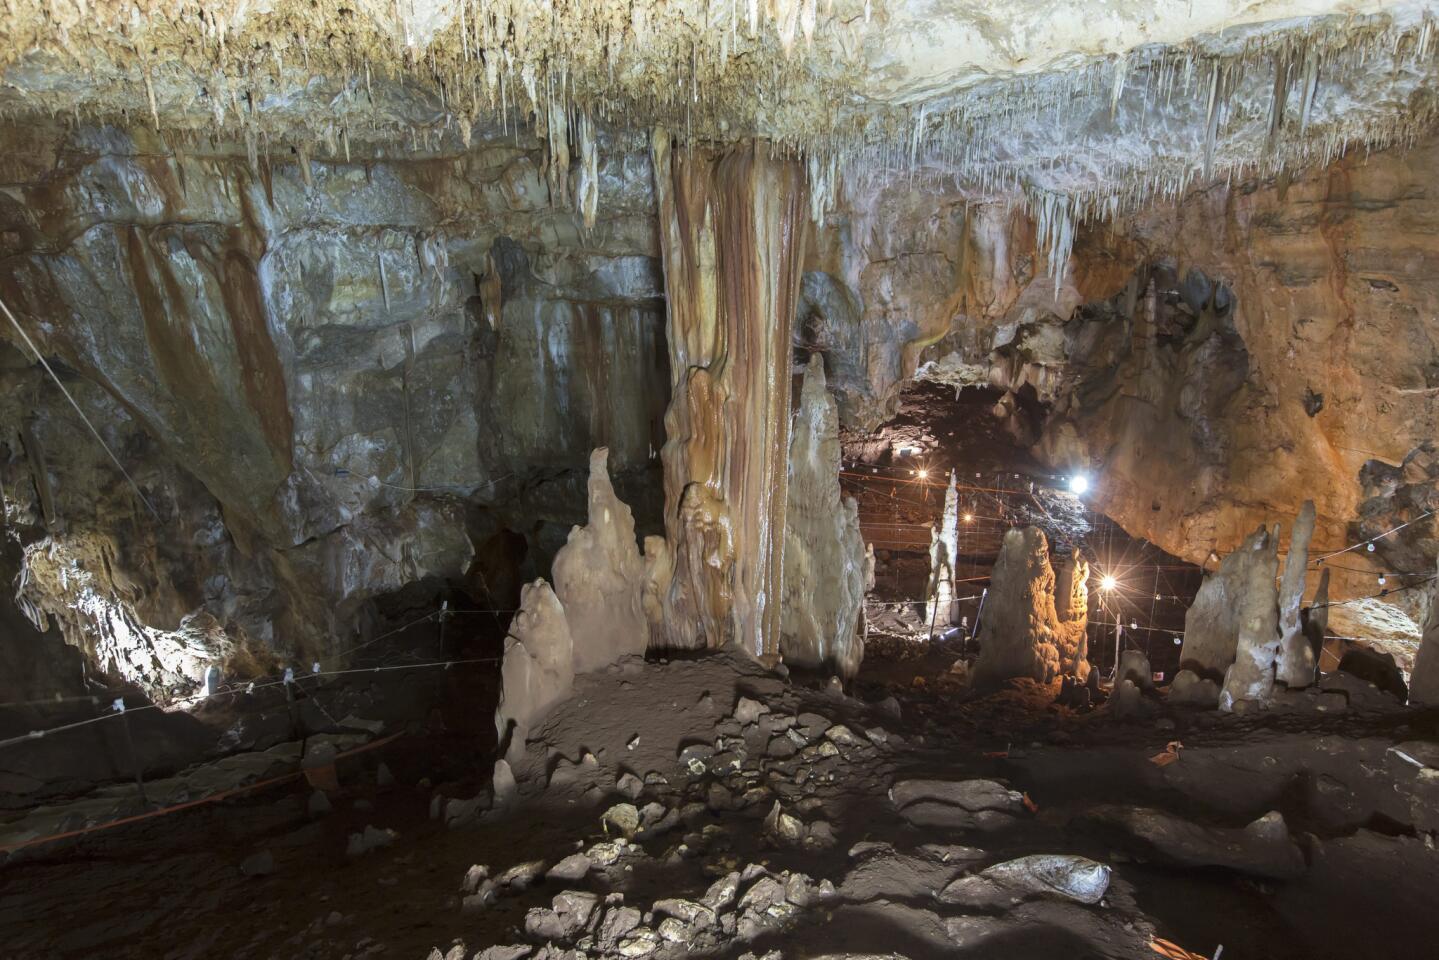 Manot cave